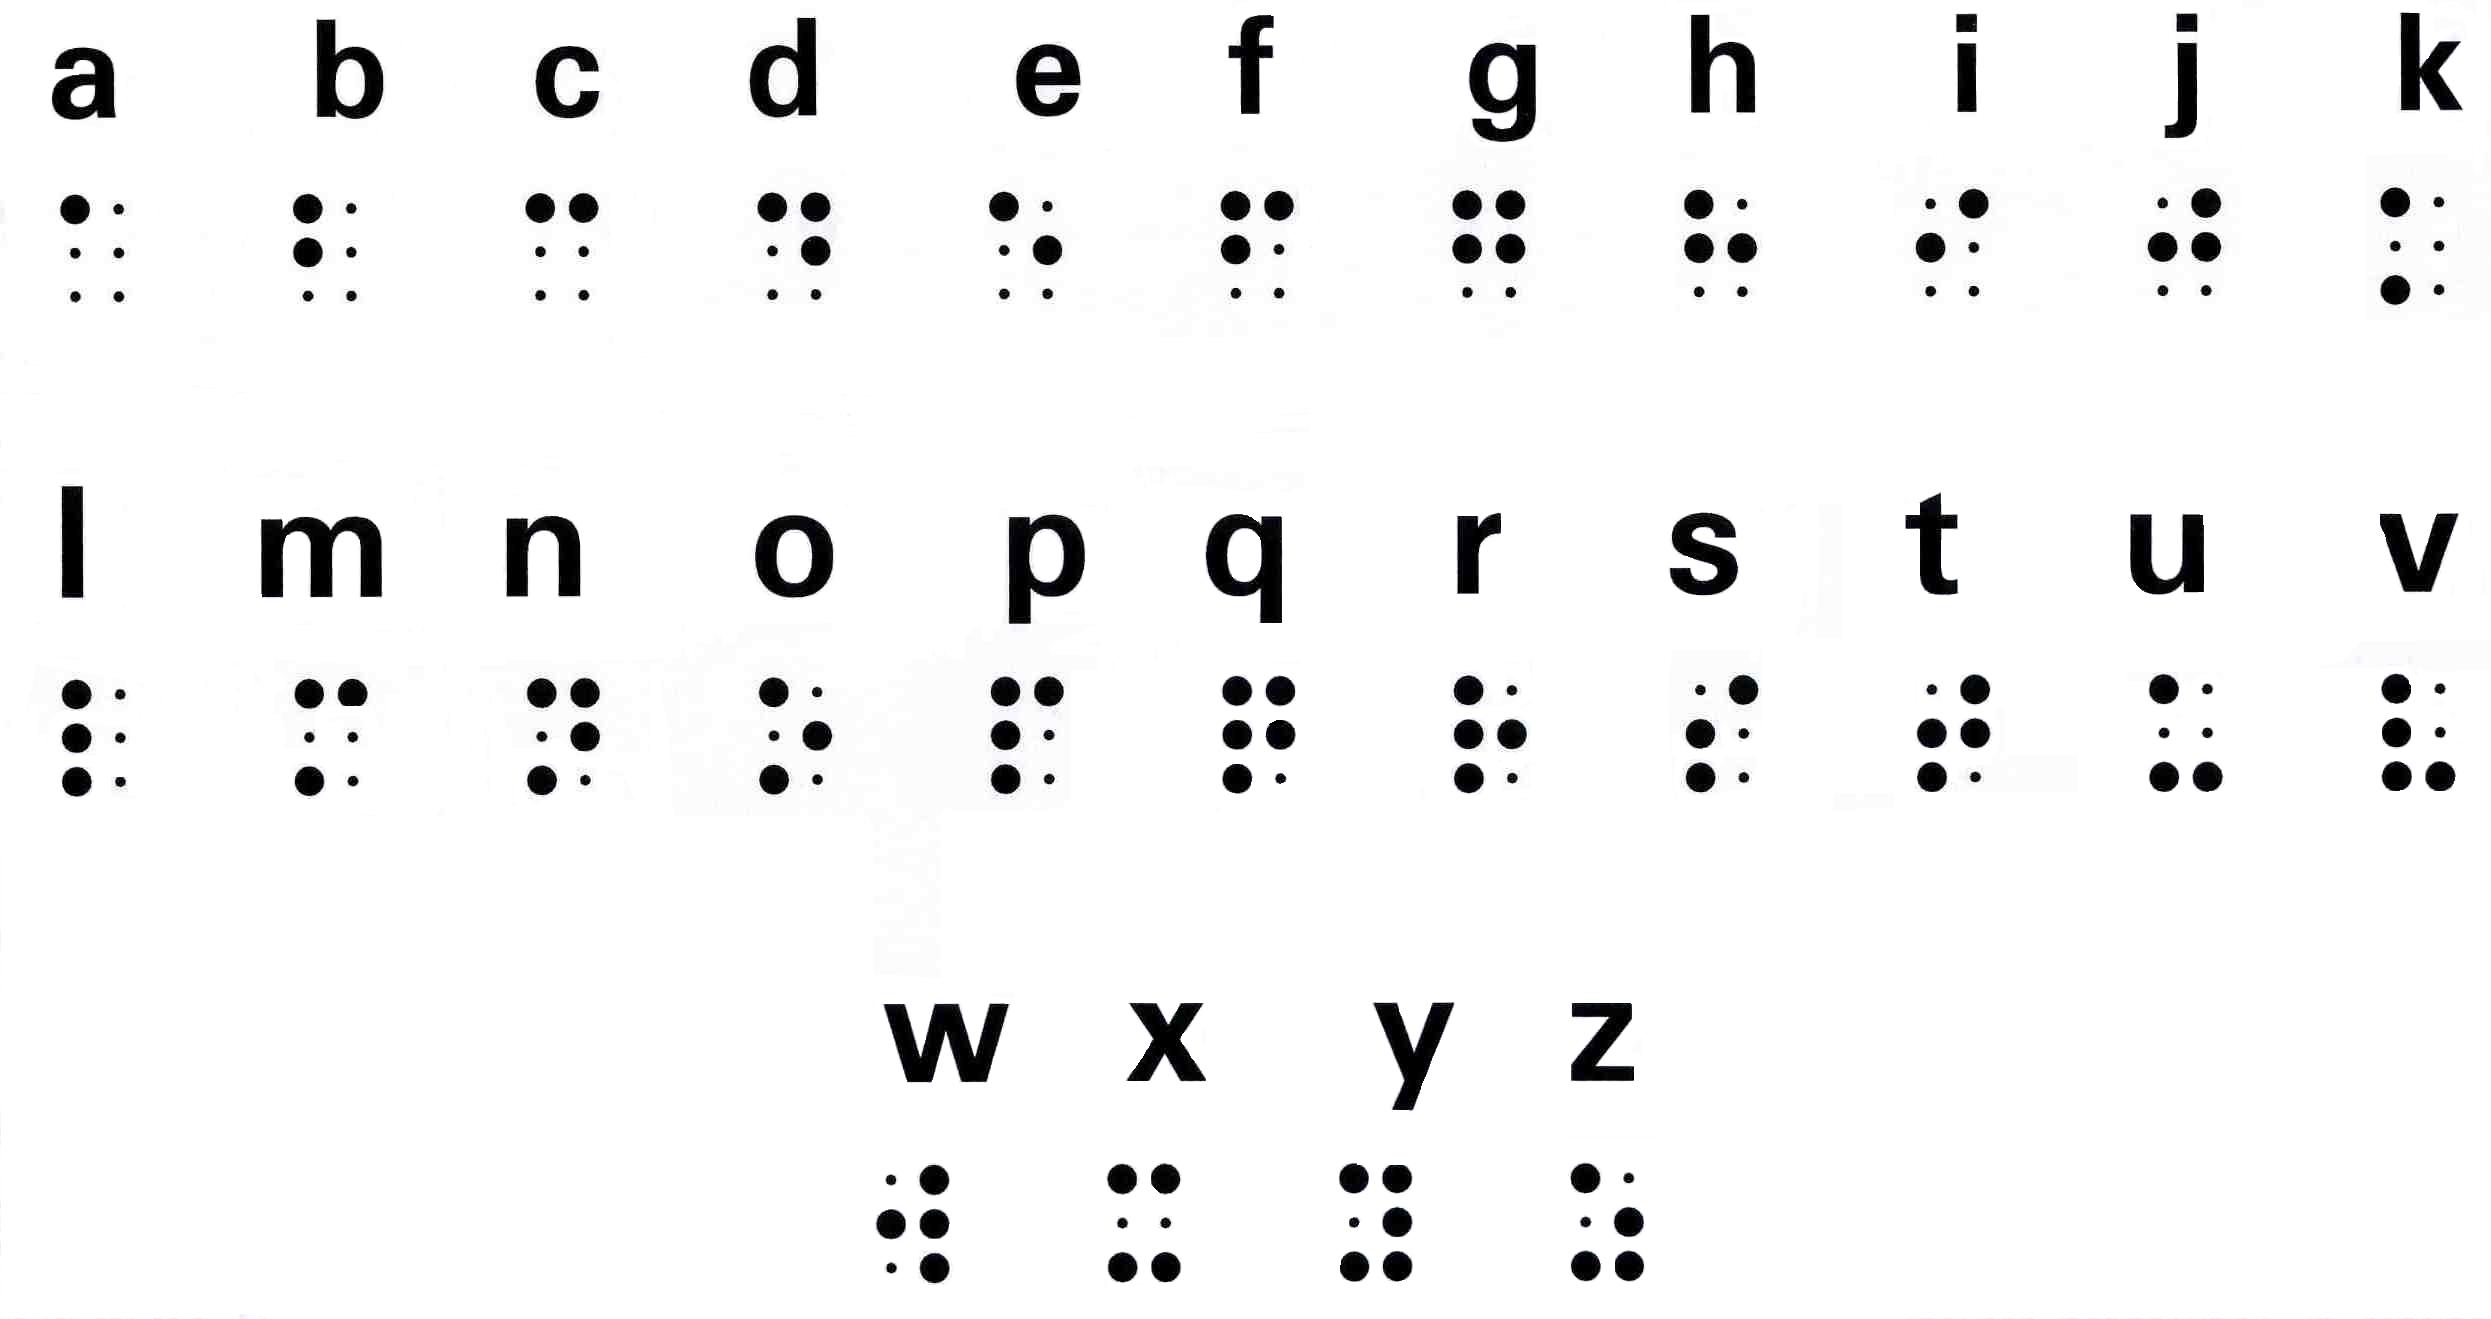 текст, алфавит, азбука, шрифт Брайля, белый фон - обои на рабочий стол